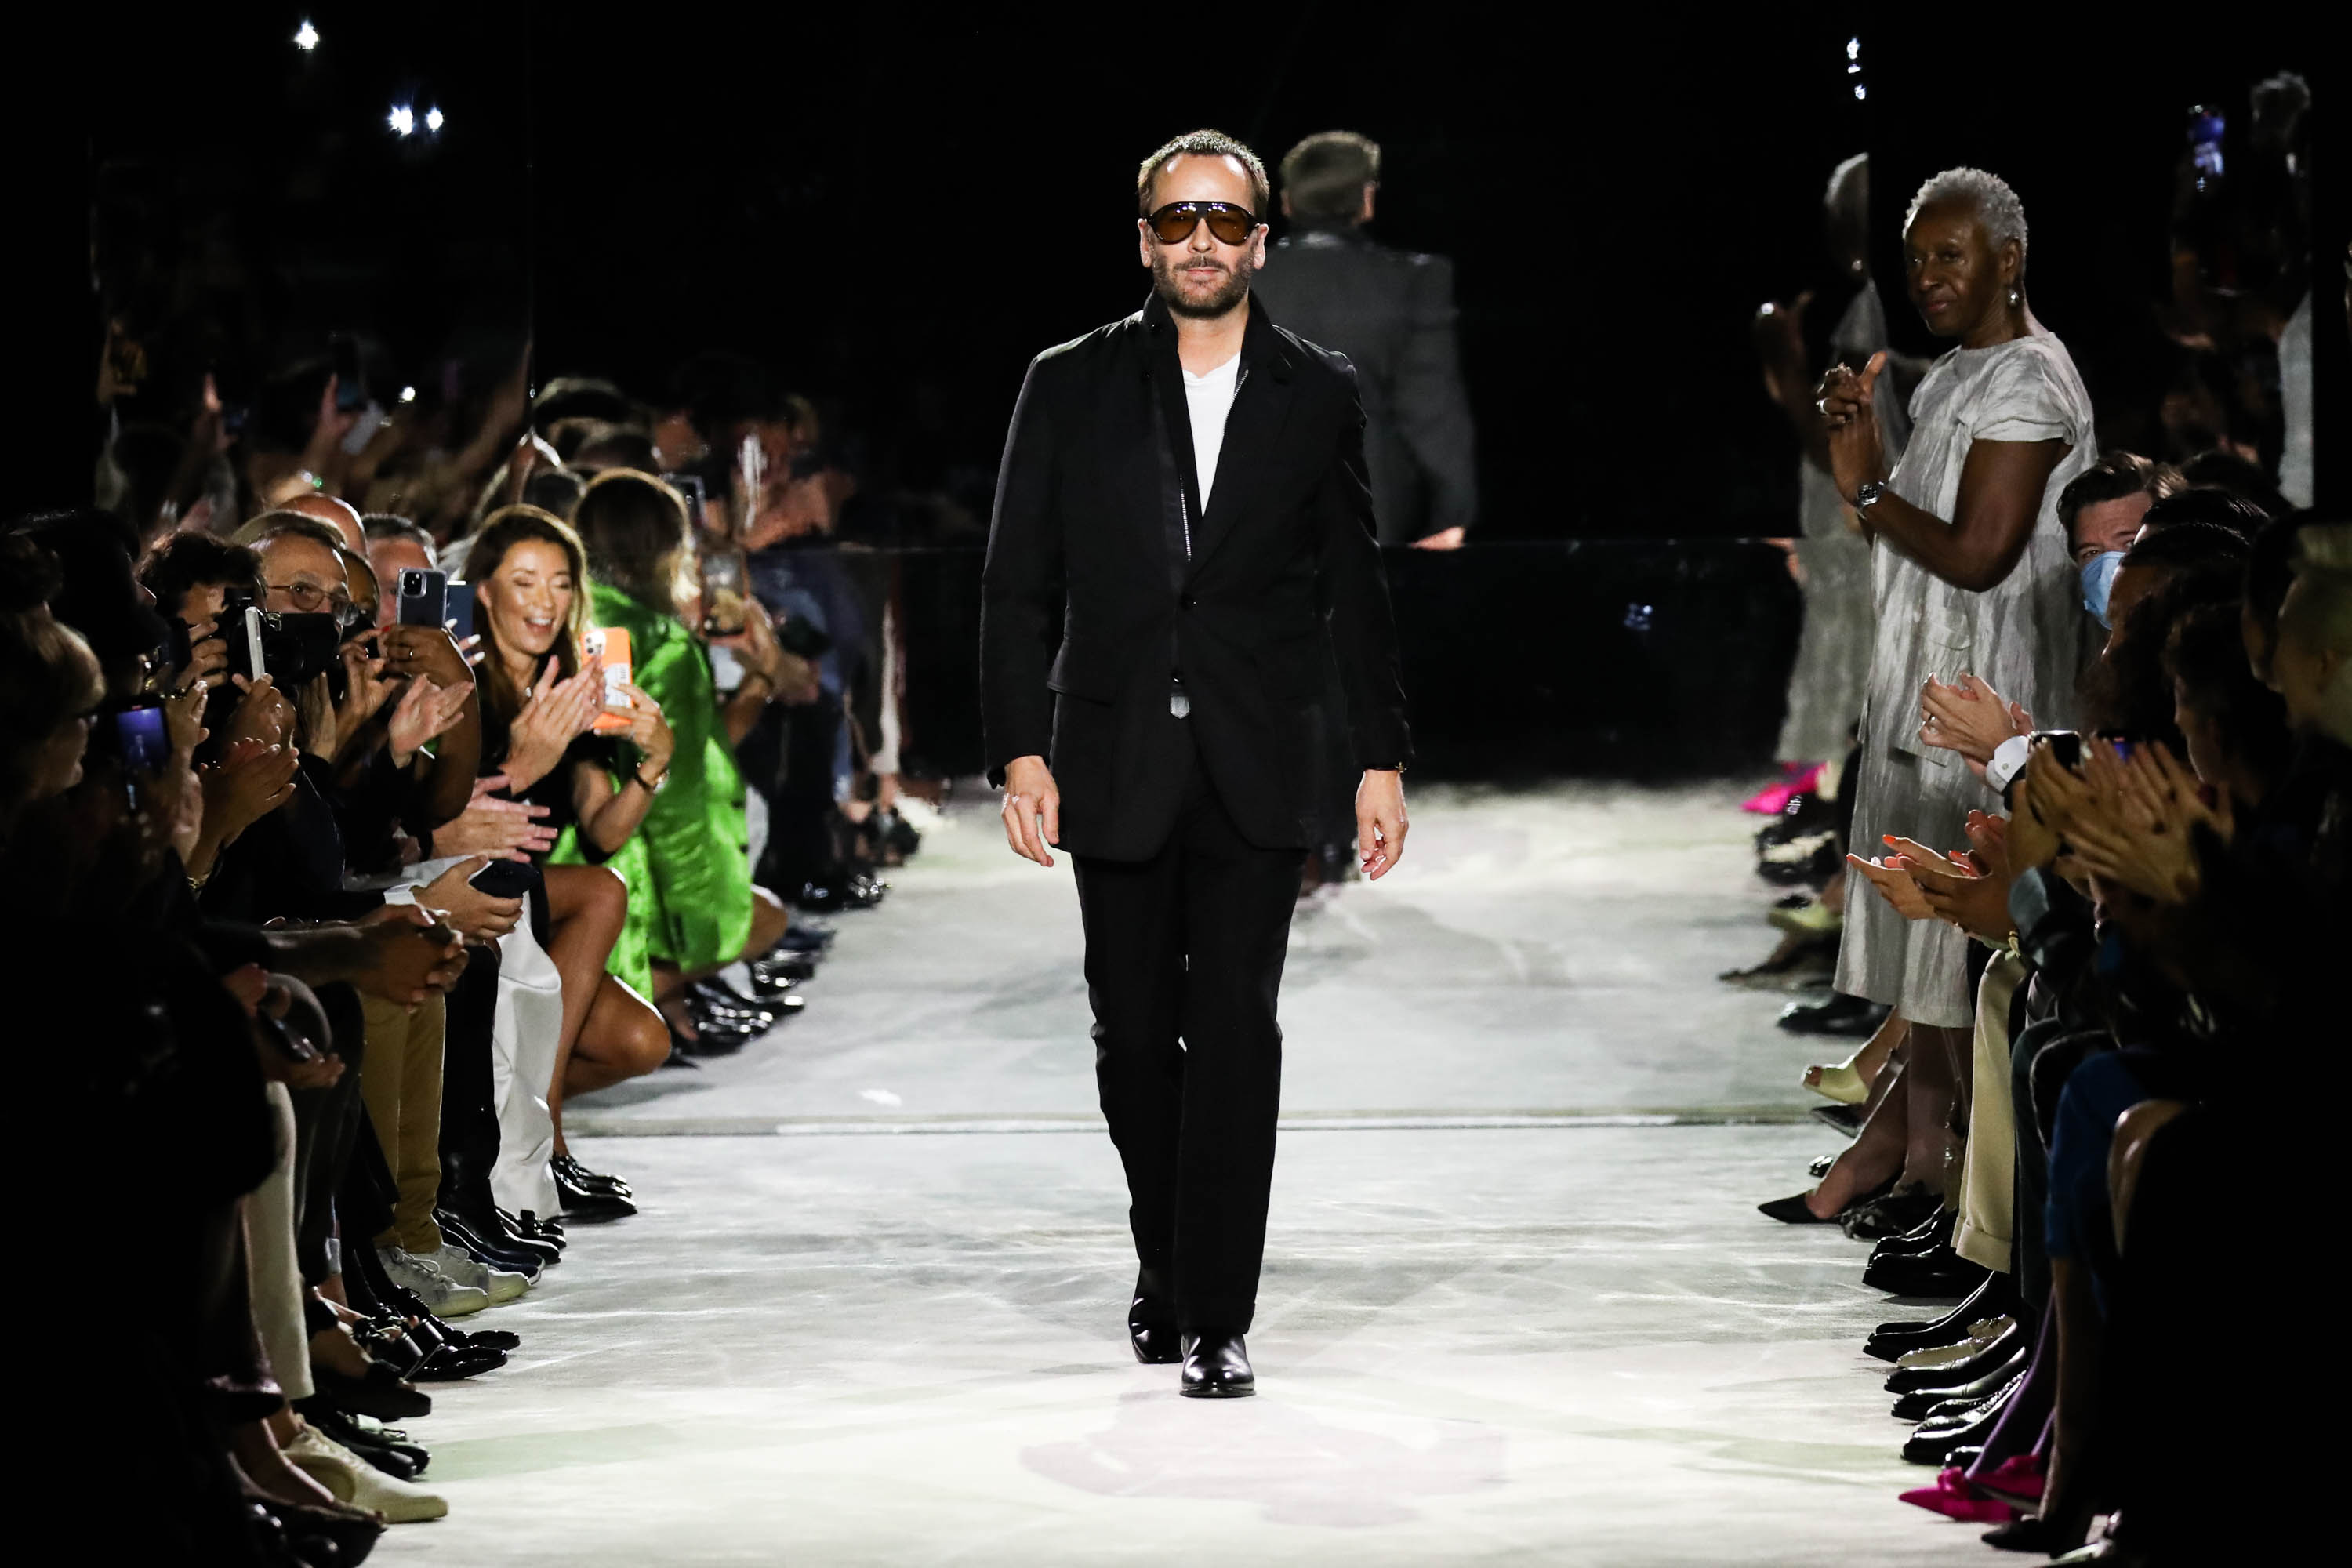 Fashion Billionaire: Designer Tom Ford Sells Brand to Estee Lauder -  Bloomberg